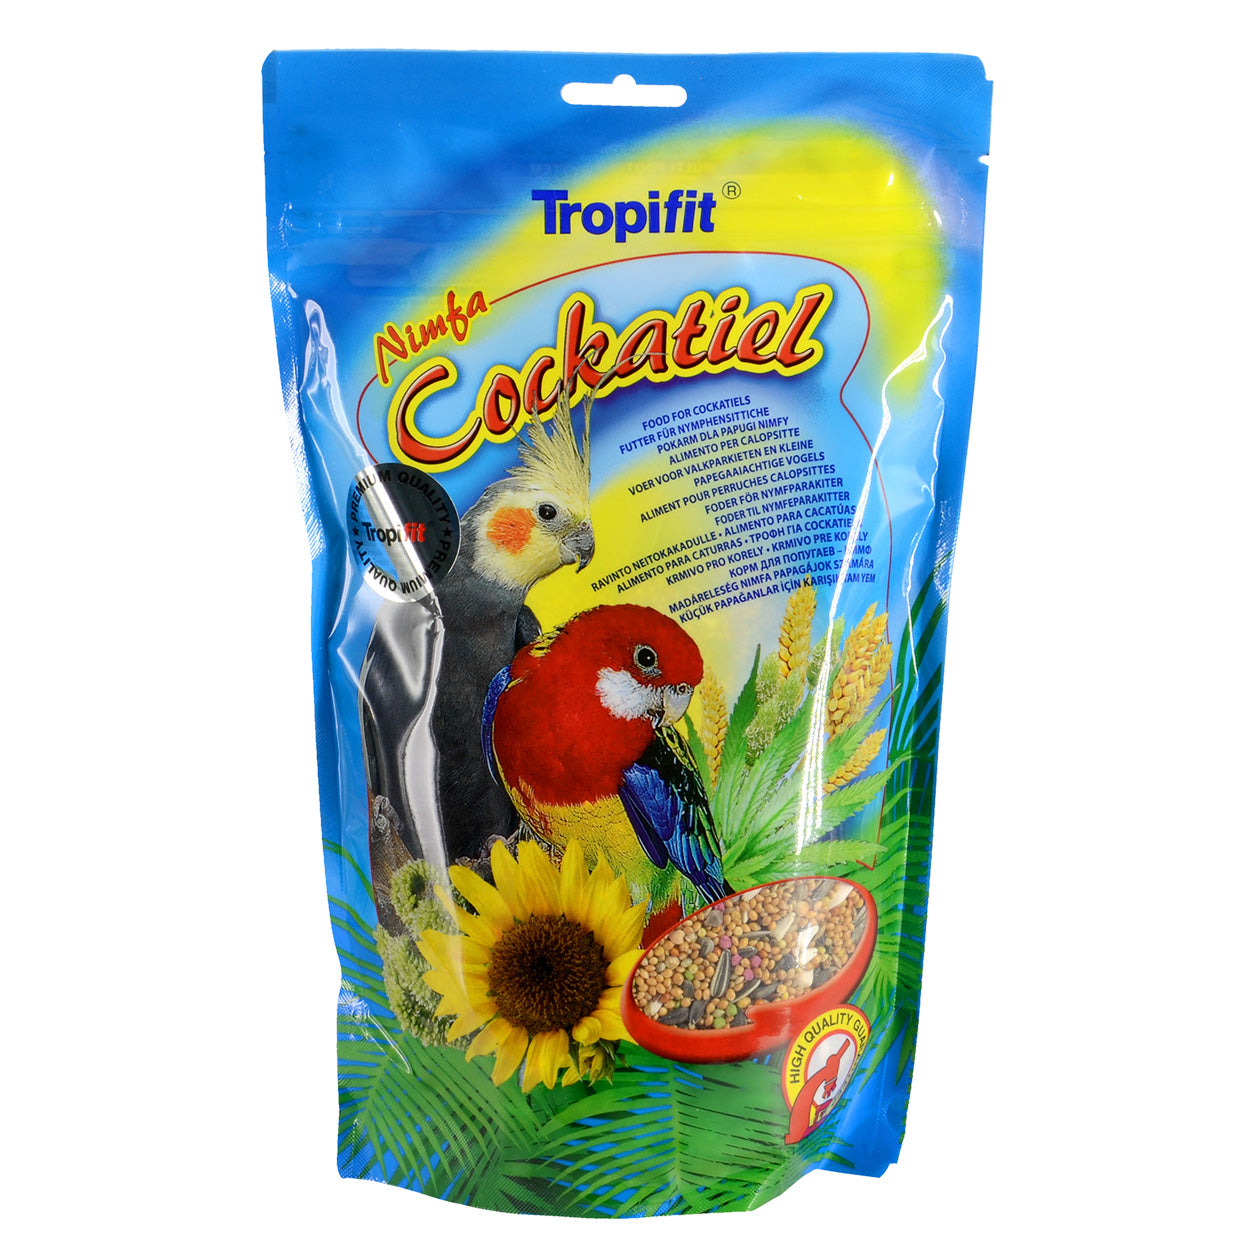 Tropifit Cockatiel Food - 700g